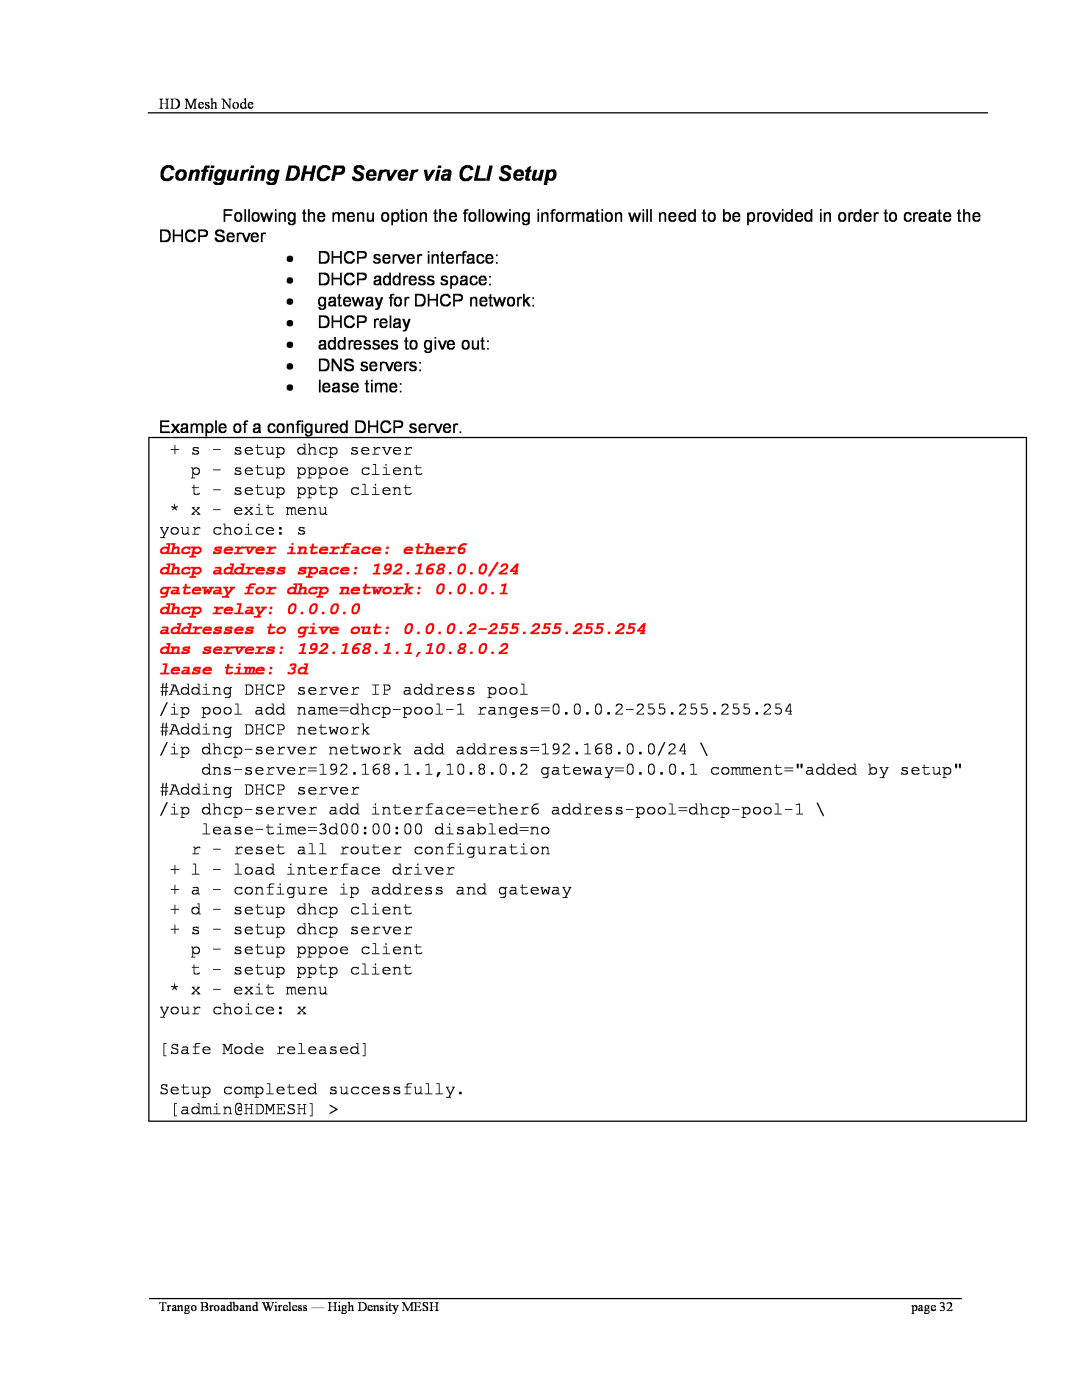 Trango Broadband High Density Mesh System user manual Configuring DHCP Server via CLI Setup 